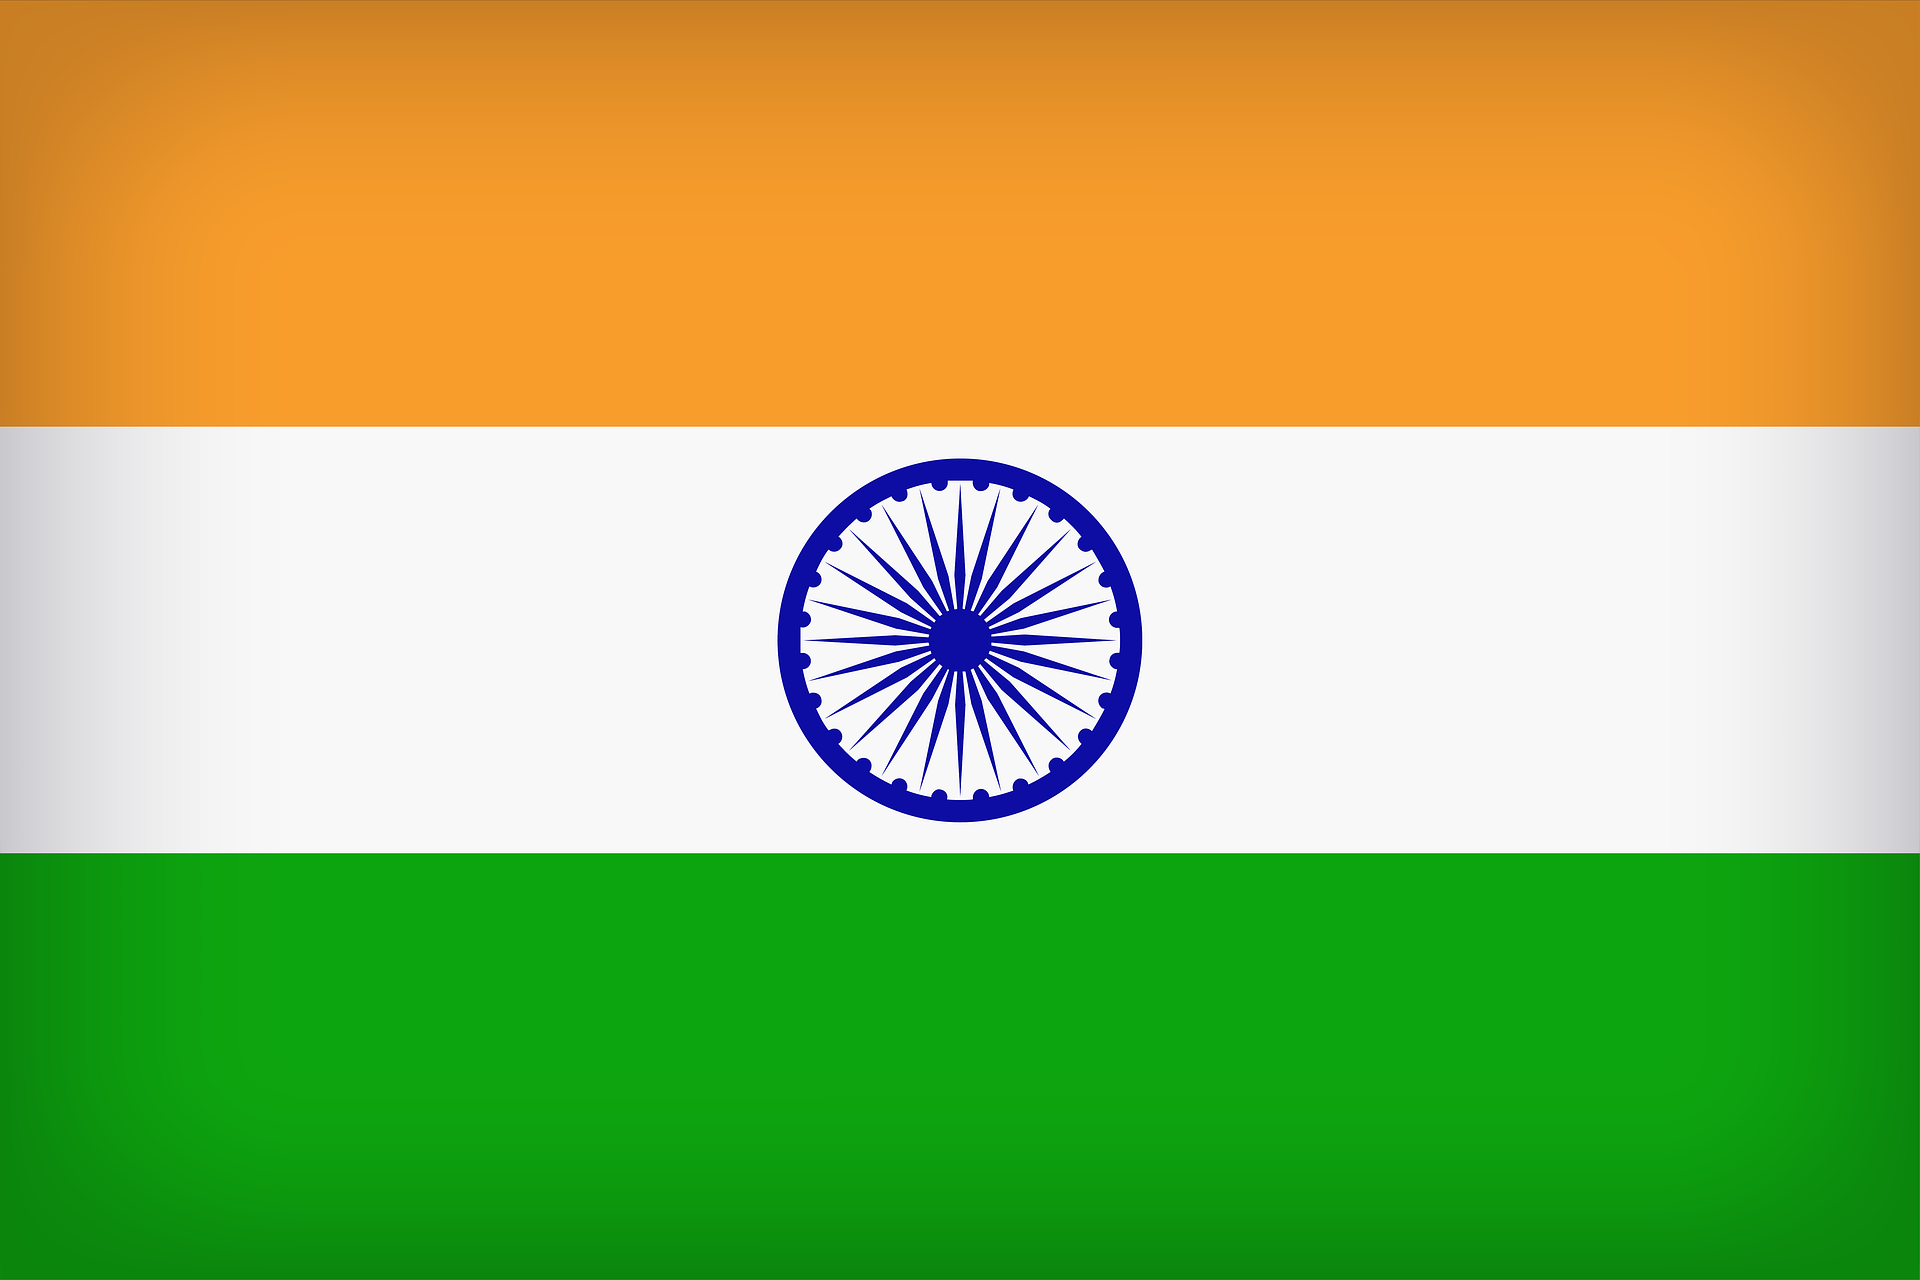 india flag,country,background,backdrop,flag,india,national,nation,patriotic,patriotism,banner,symbol,design,government,pride,culture,tricolor,honor,heritage,